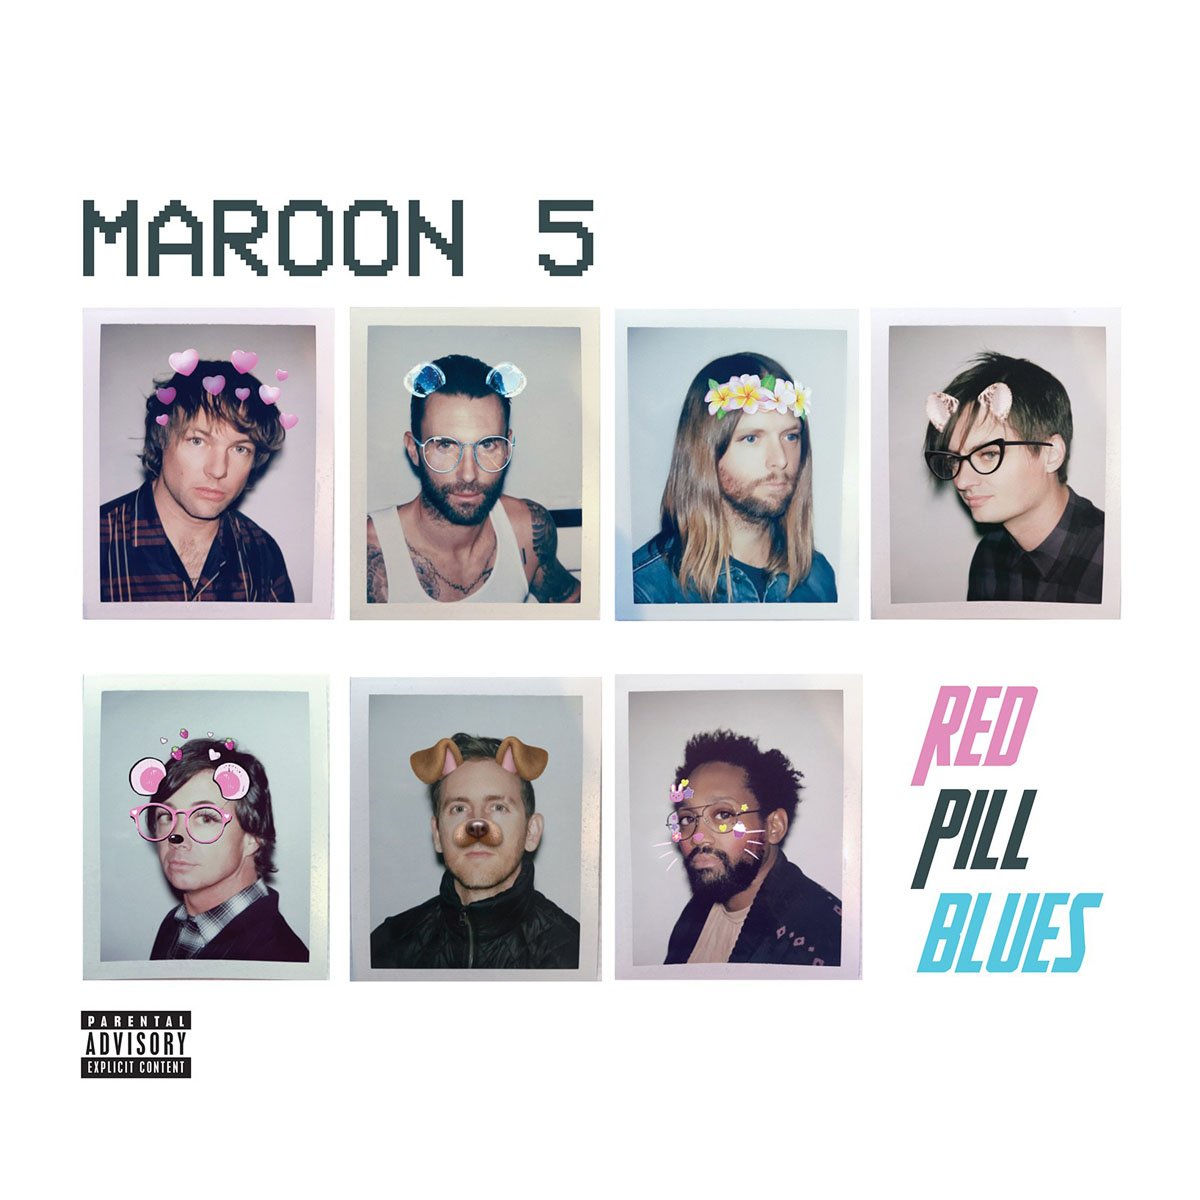 2 Cds Maroon 5 Red Pill Blues